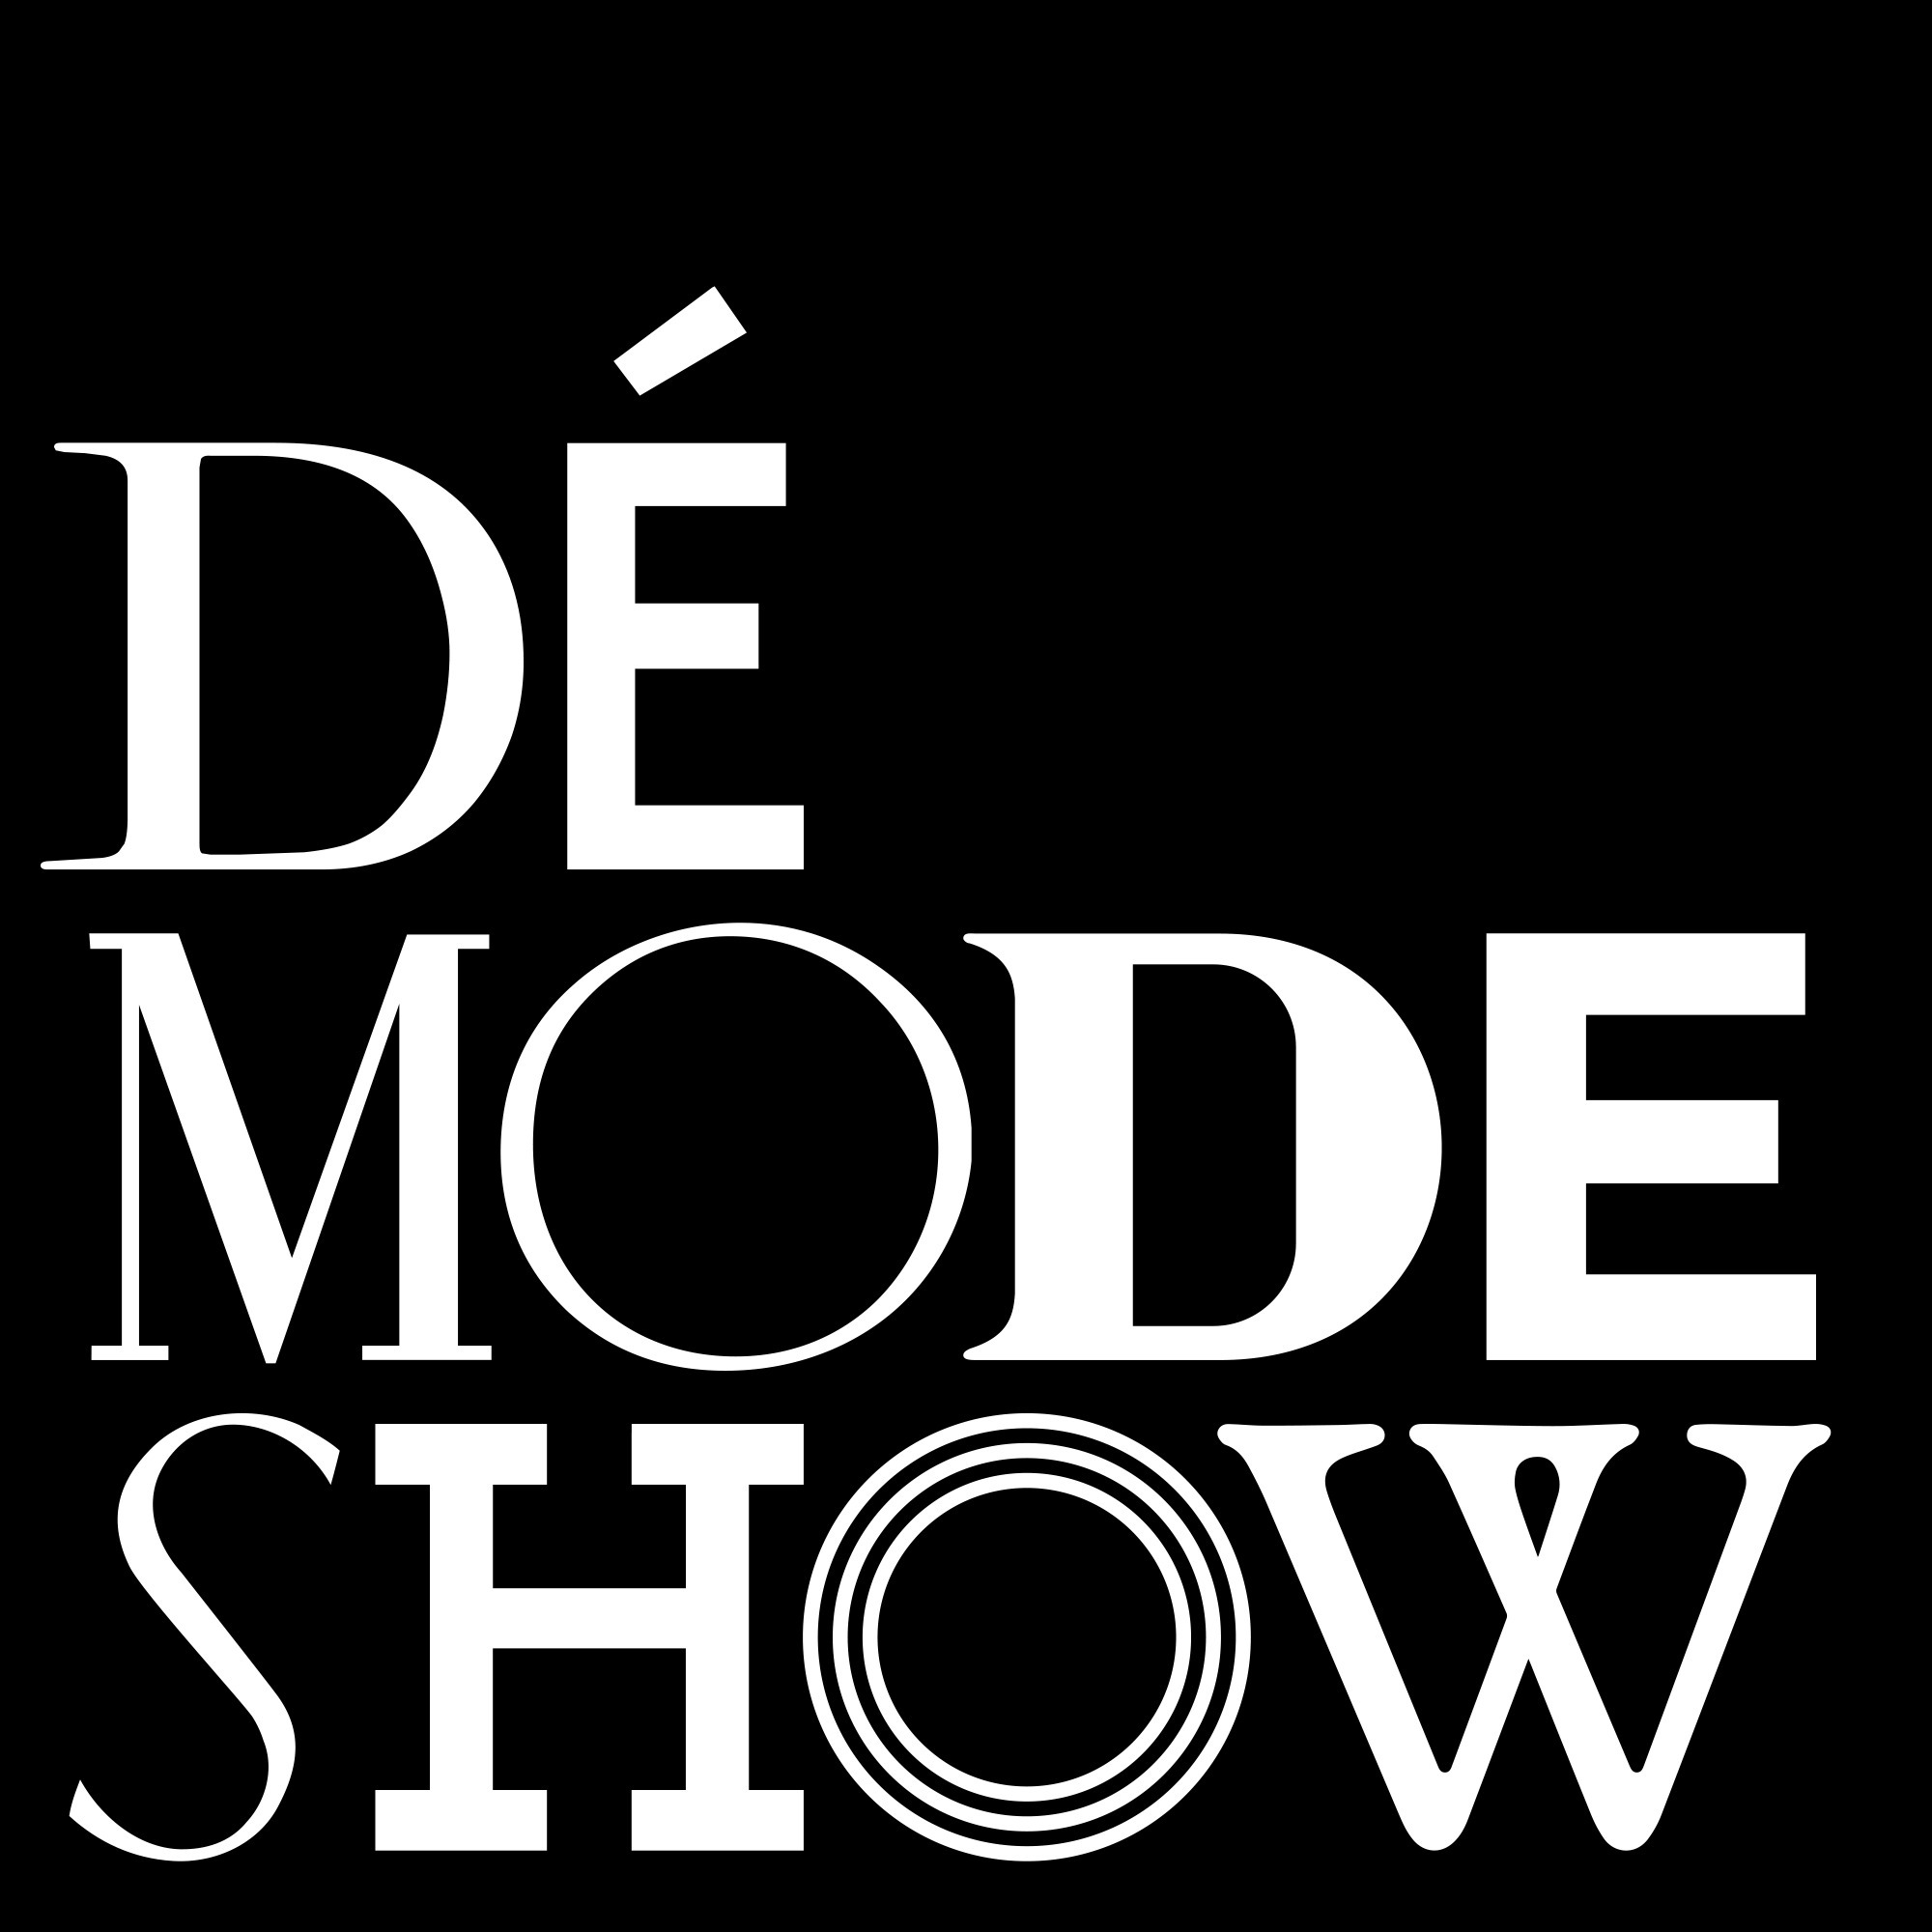 Mode meets Beauty in De Modeshow #5